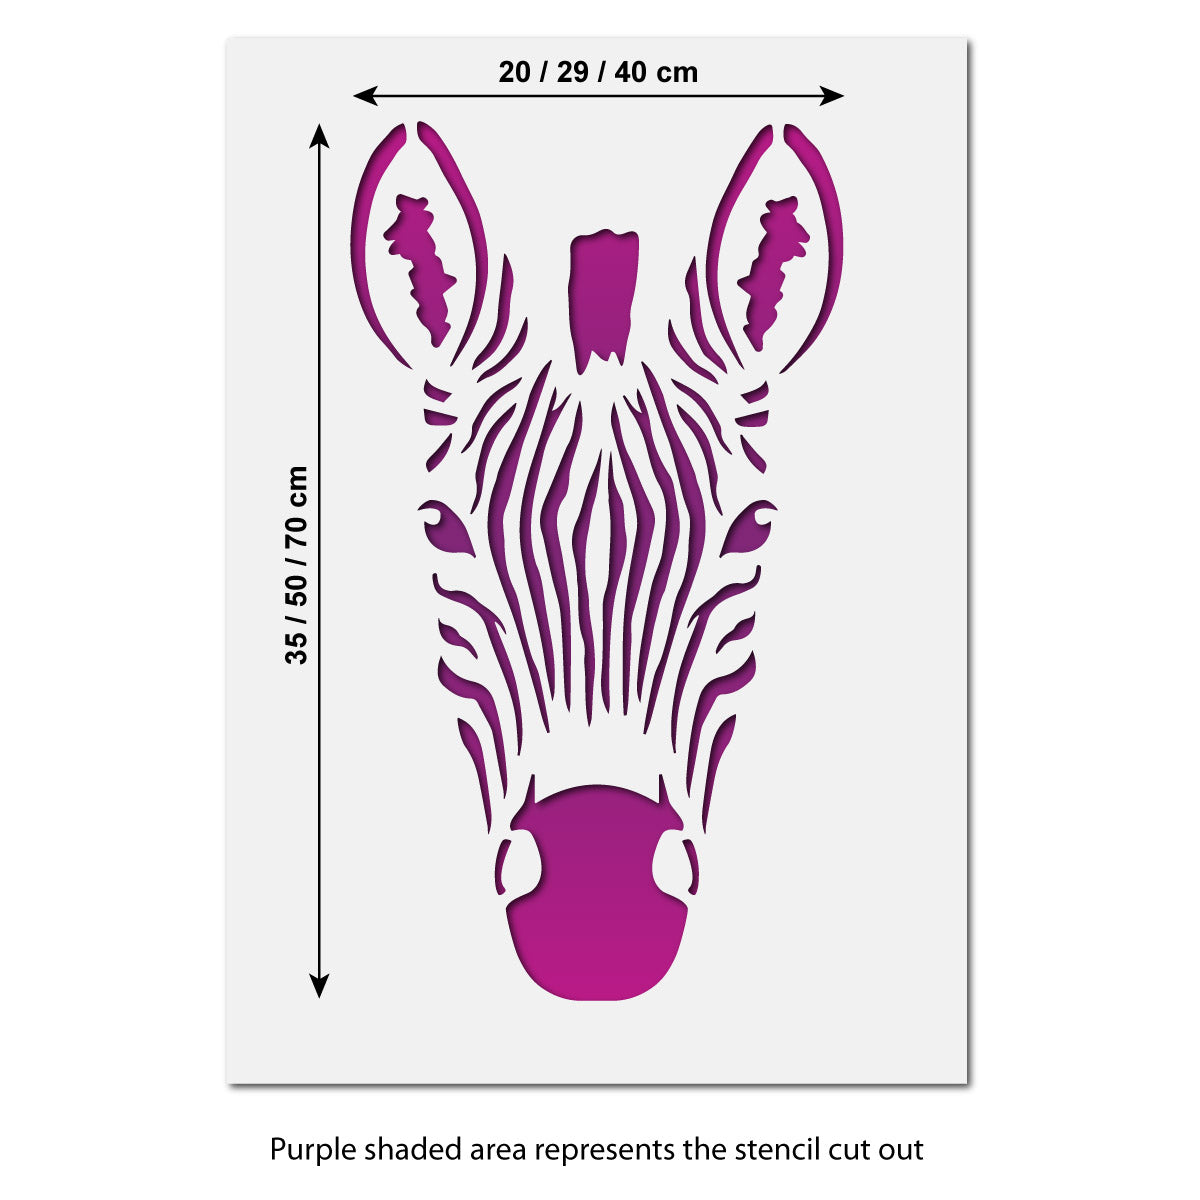 CraftStar Zebra Head Wall Stencil - Size Guide